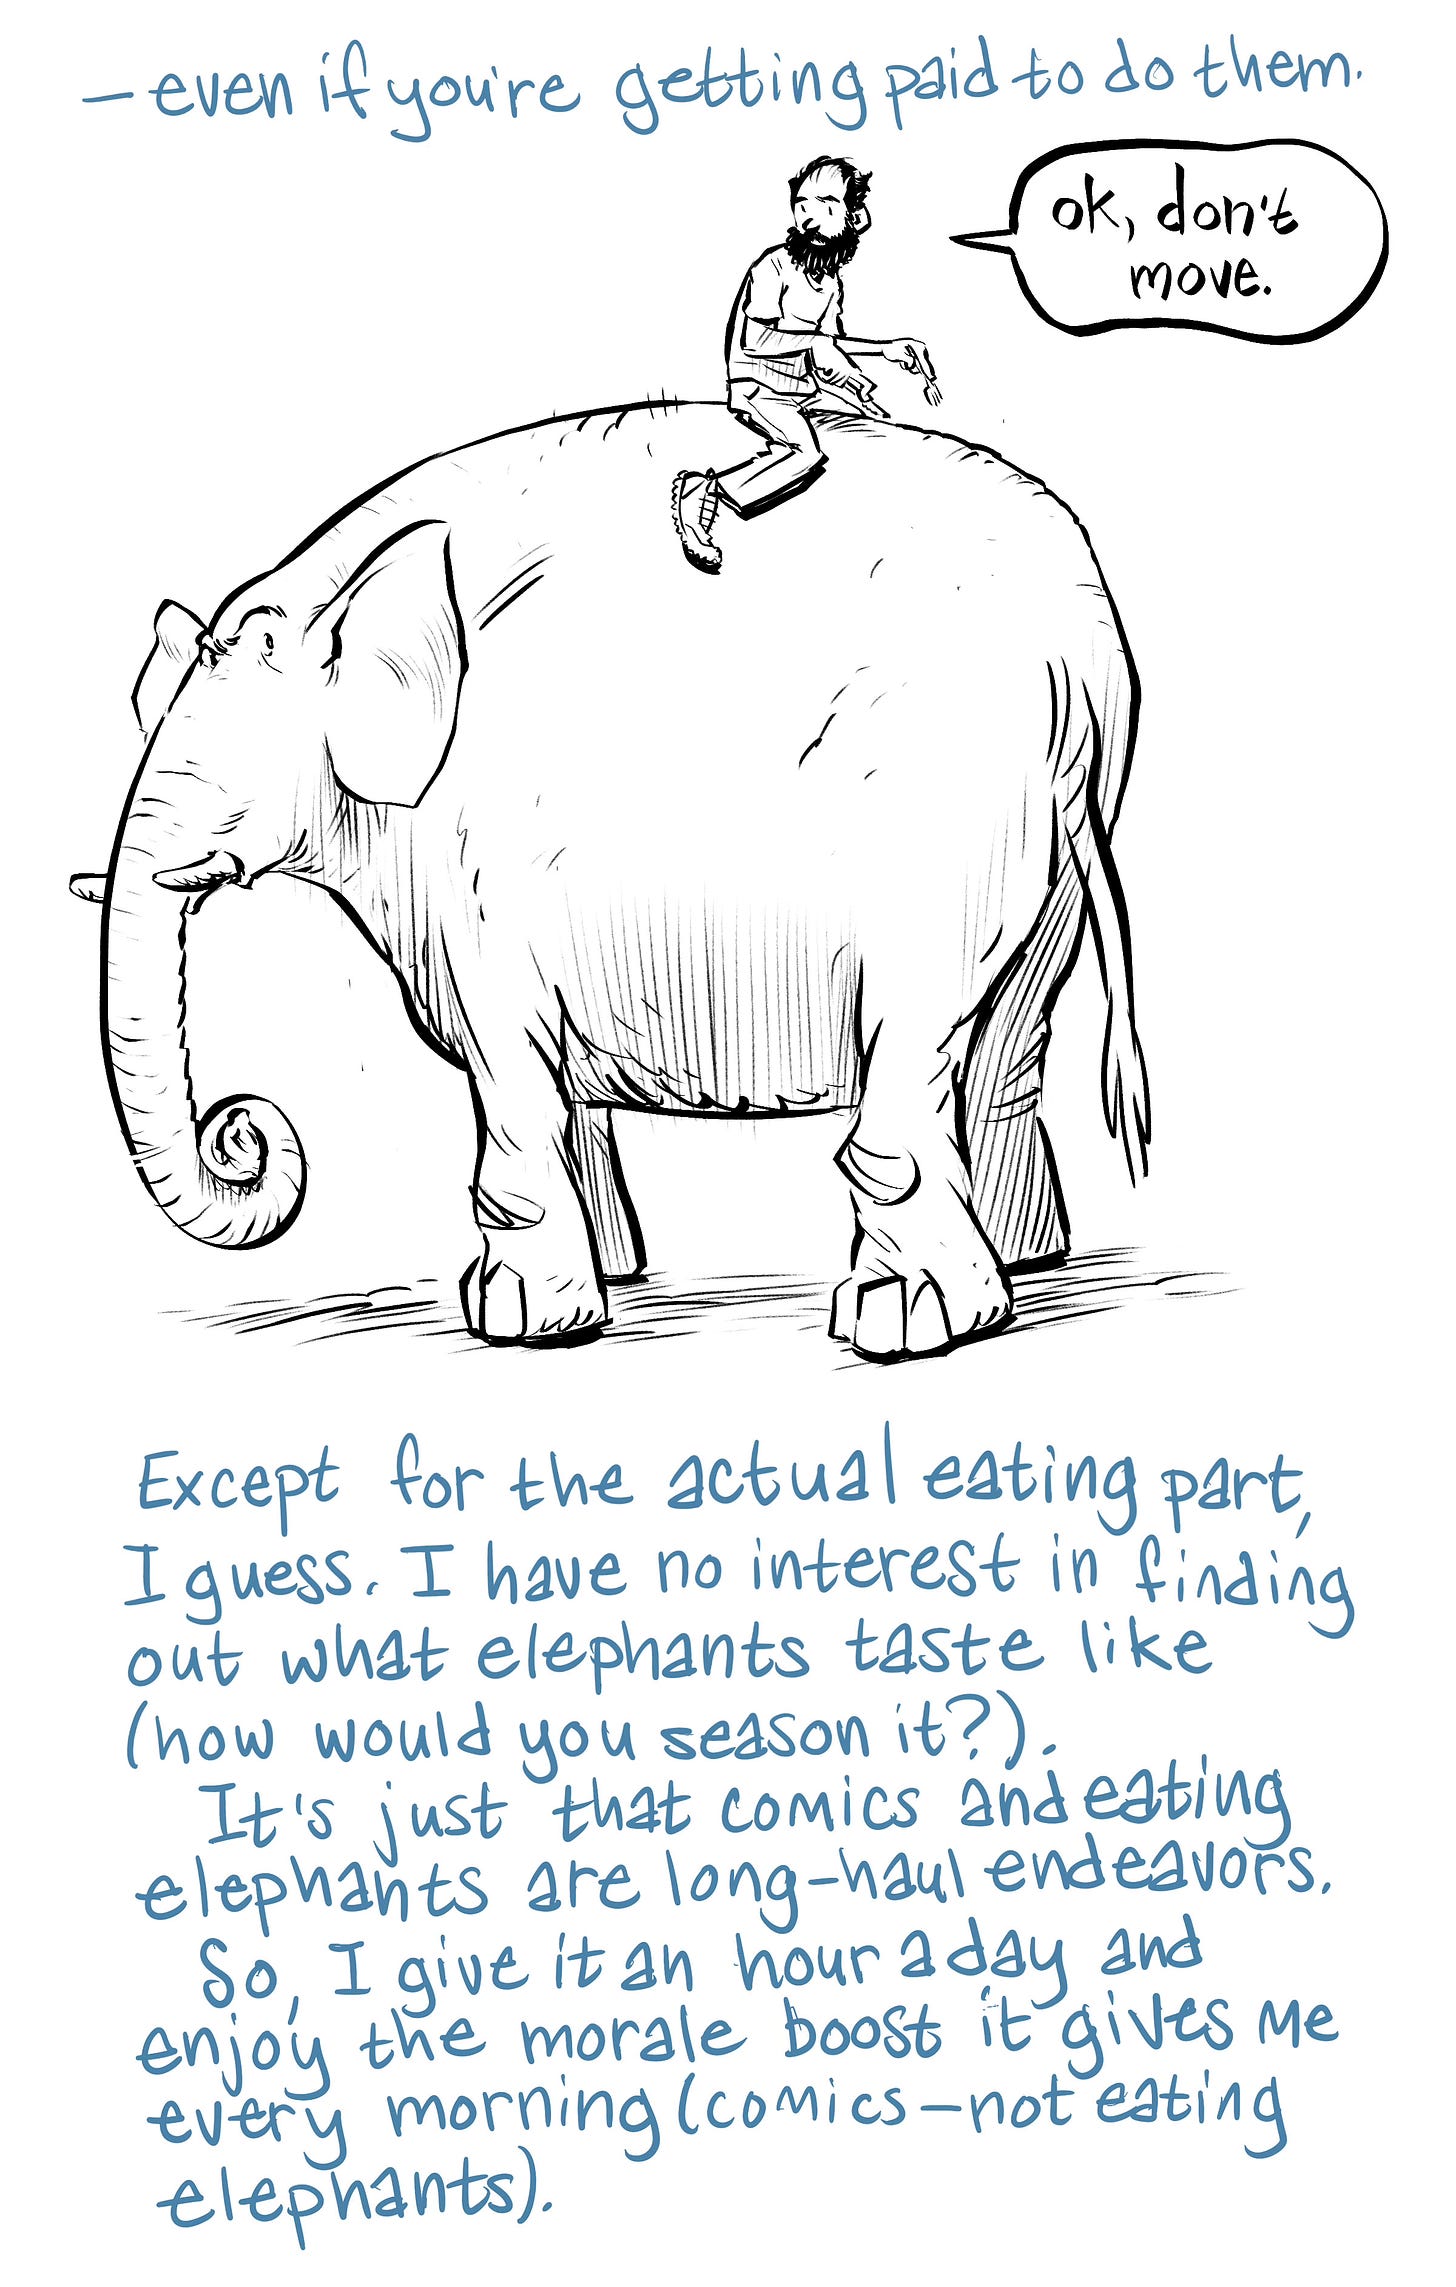 Ryan Claytor eating and elephant comics